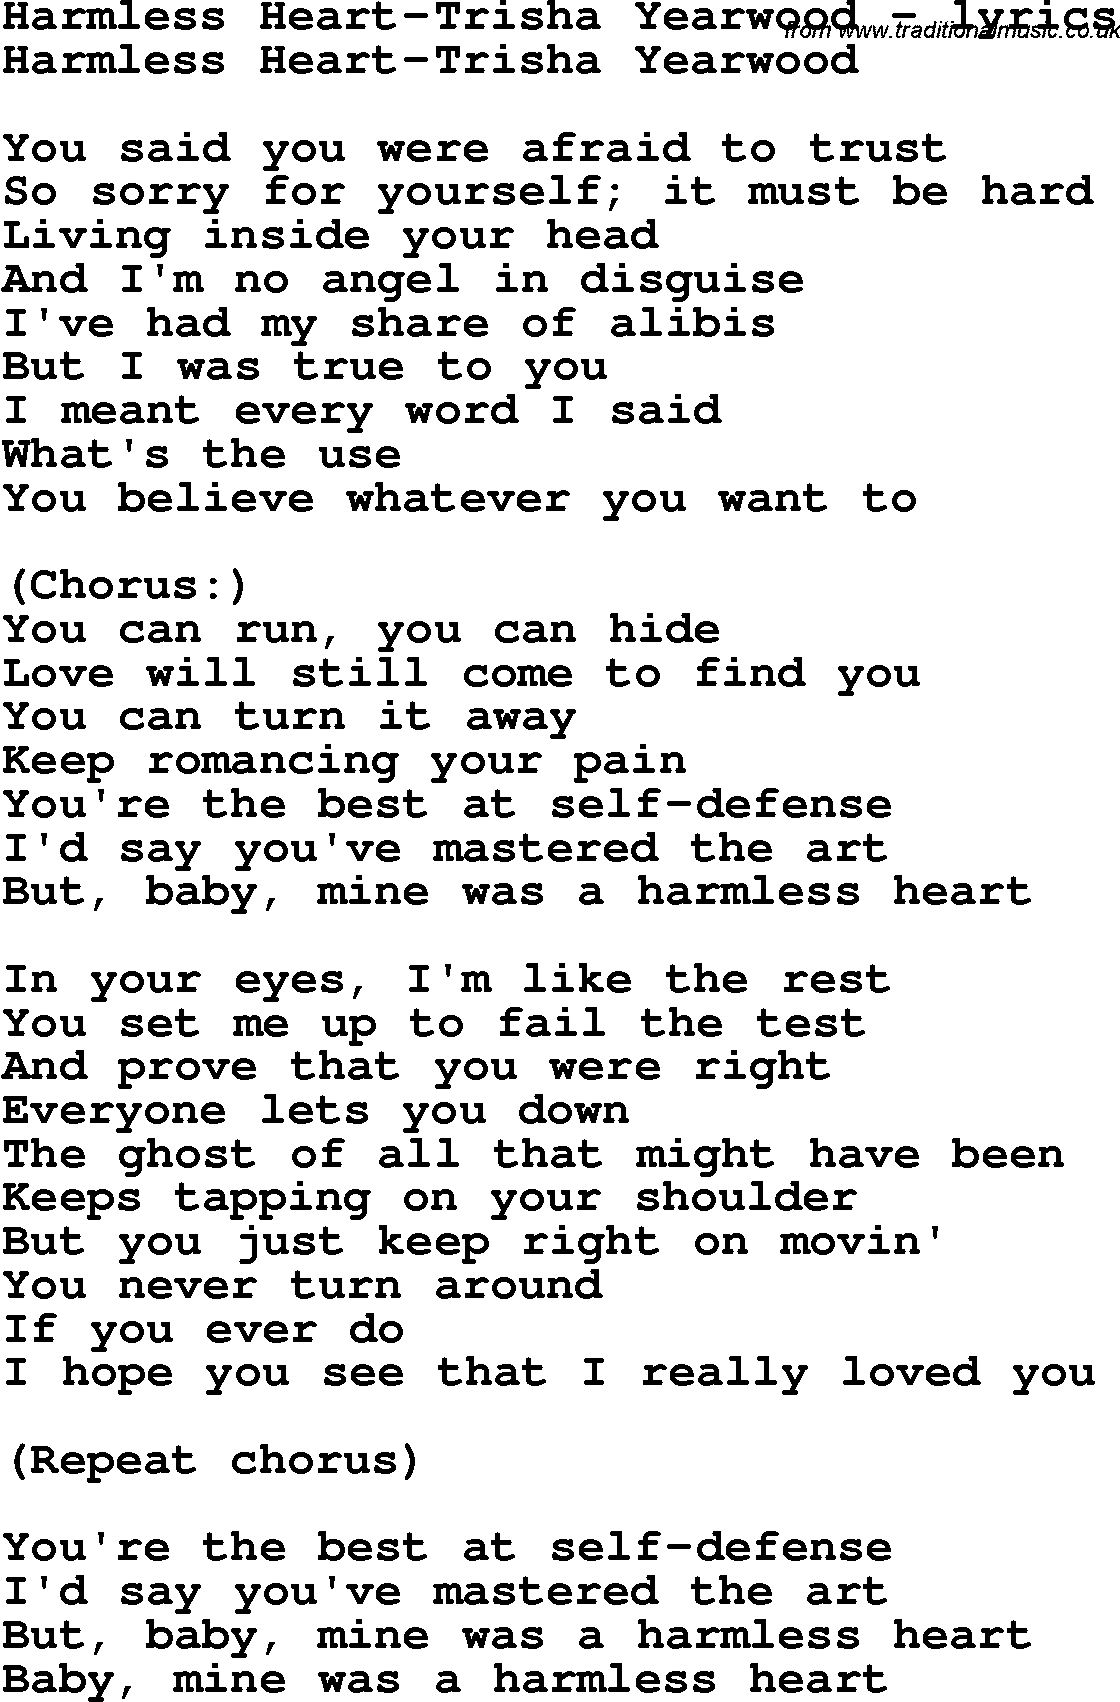 Love Song Lyrics for: Harmless Heart-Trisha Yearwood